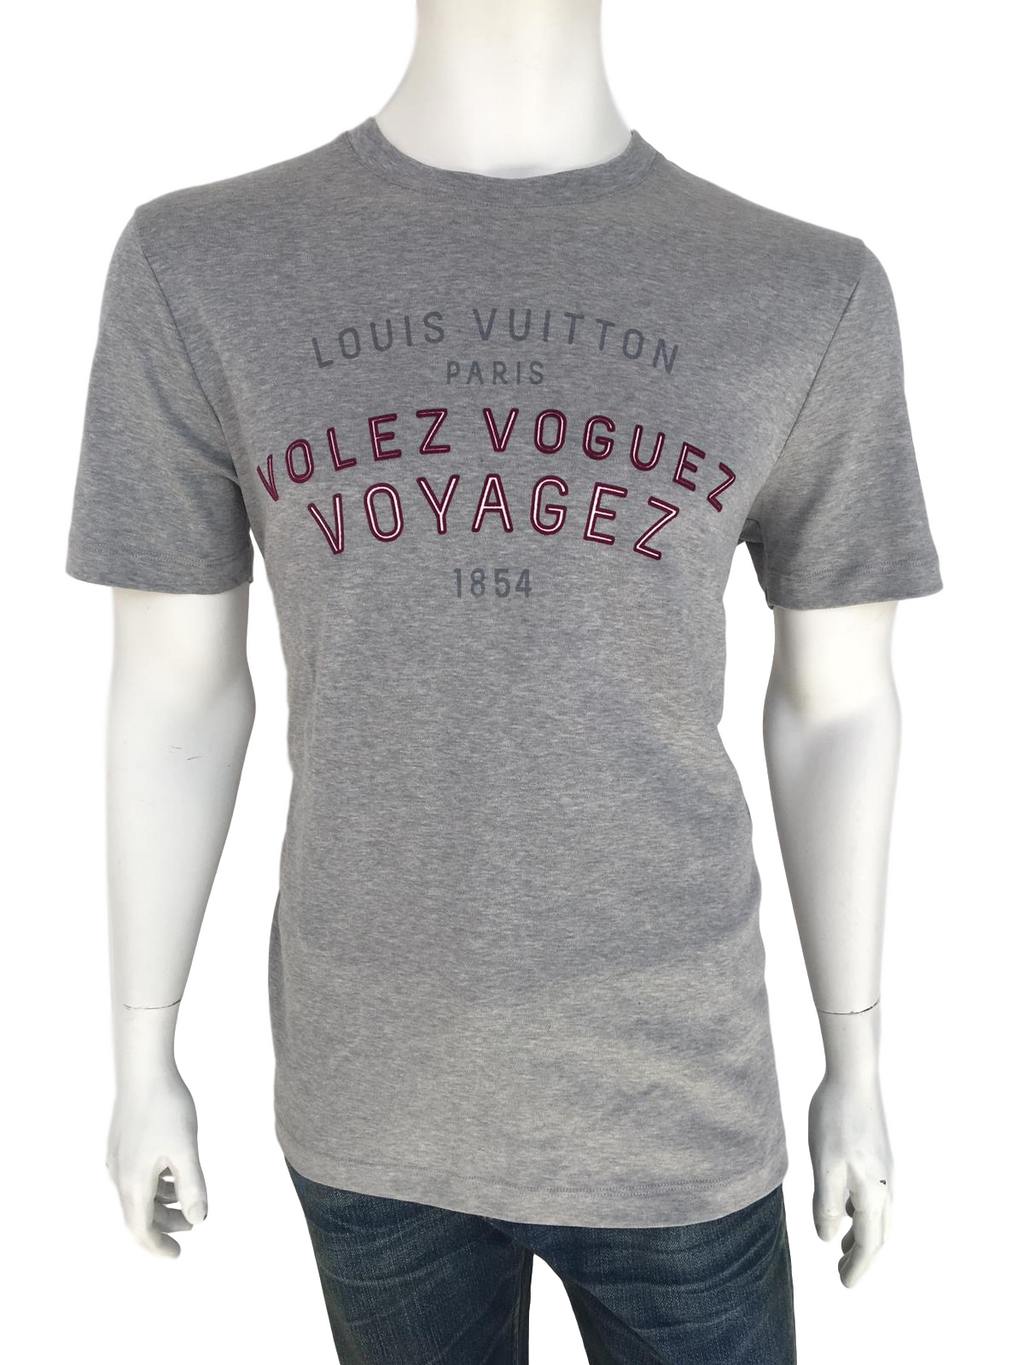 Volez Voguez Voyagez T-Shirt